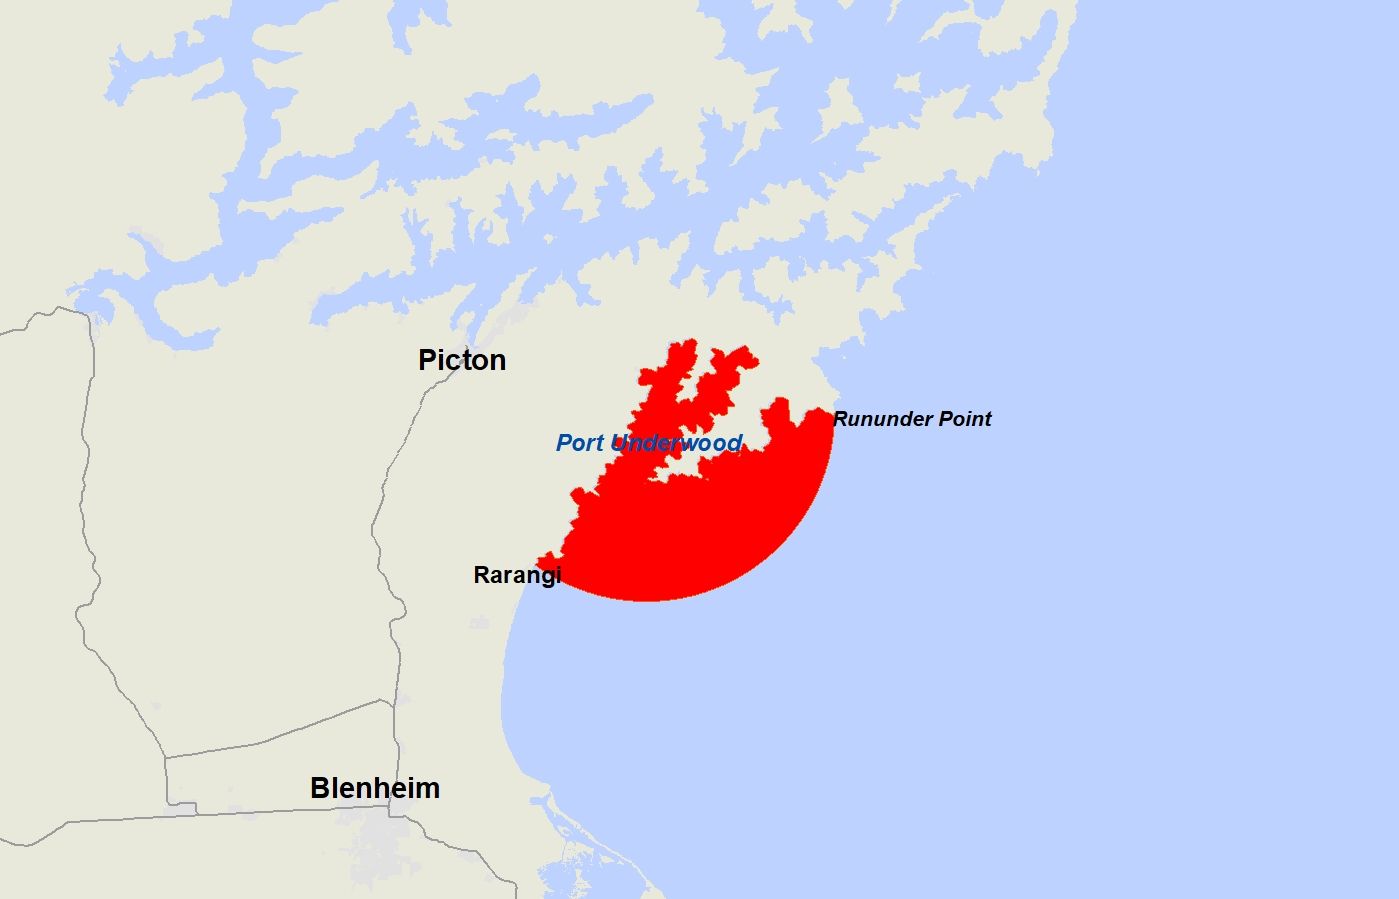 Marine Bio-toxin alert for Port Underwood